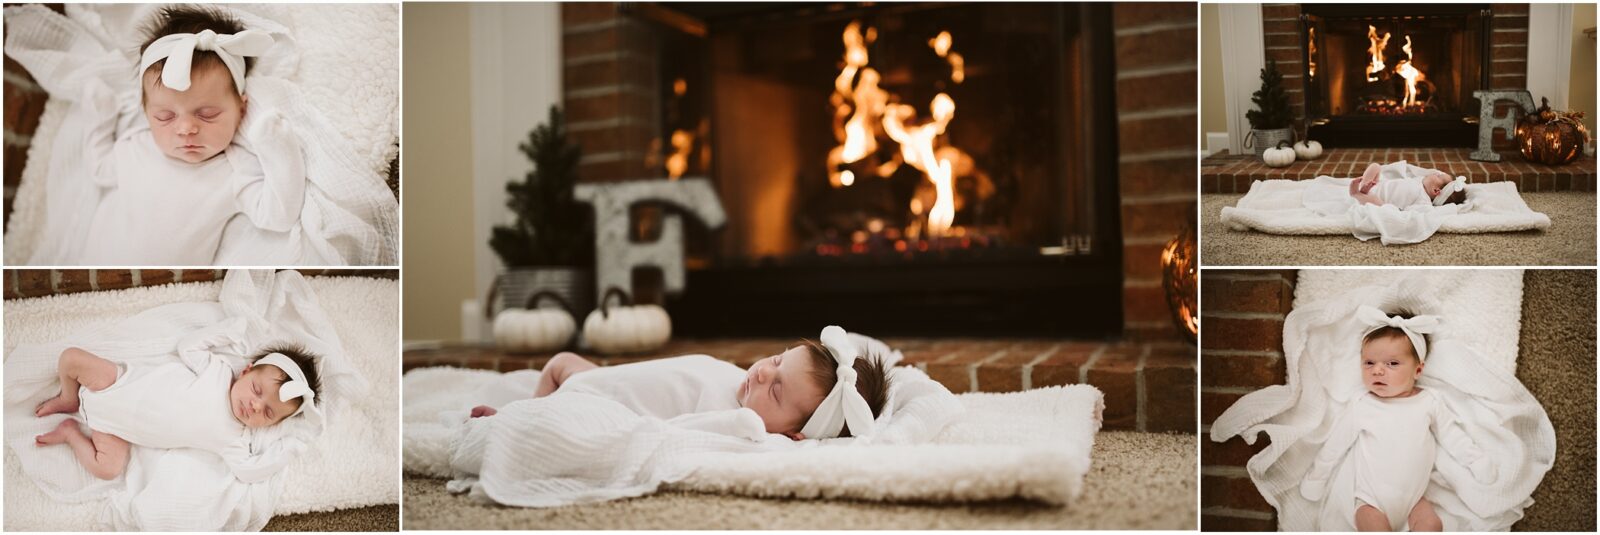 Newborn Lifestyle photos of a newborn baby girl sleeping near a fireplace. Photograph by Laura Mares Photography, Pittsburgh Newborn Lifestyle Photographer